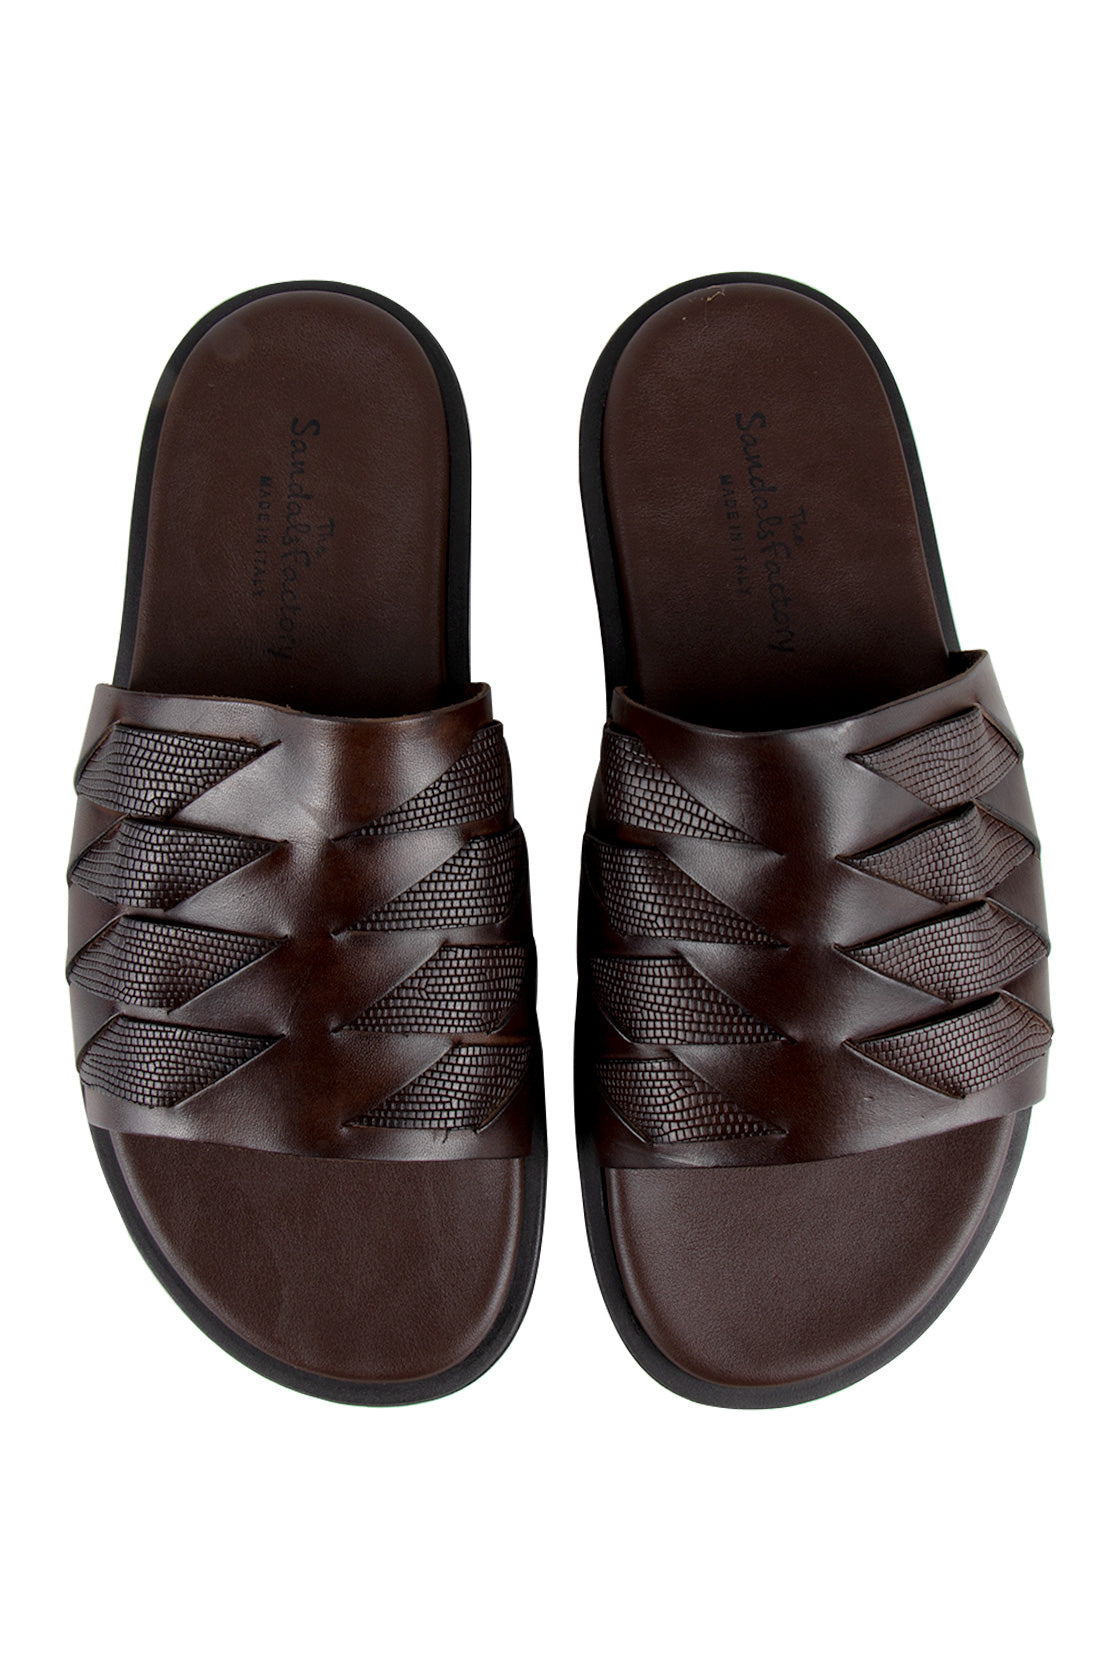 Italian Leather Sandals Shoes Vintage Handmade in Ita… - Gem